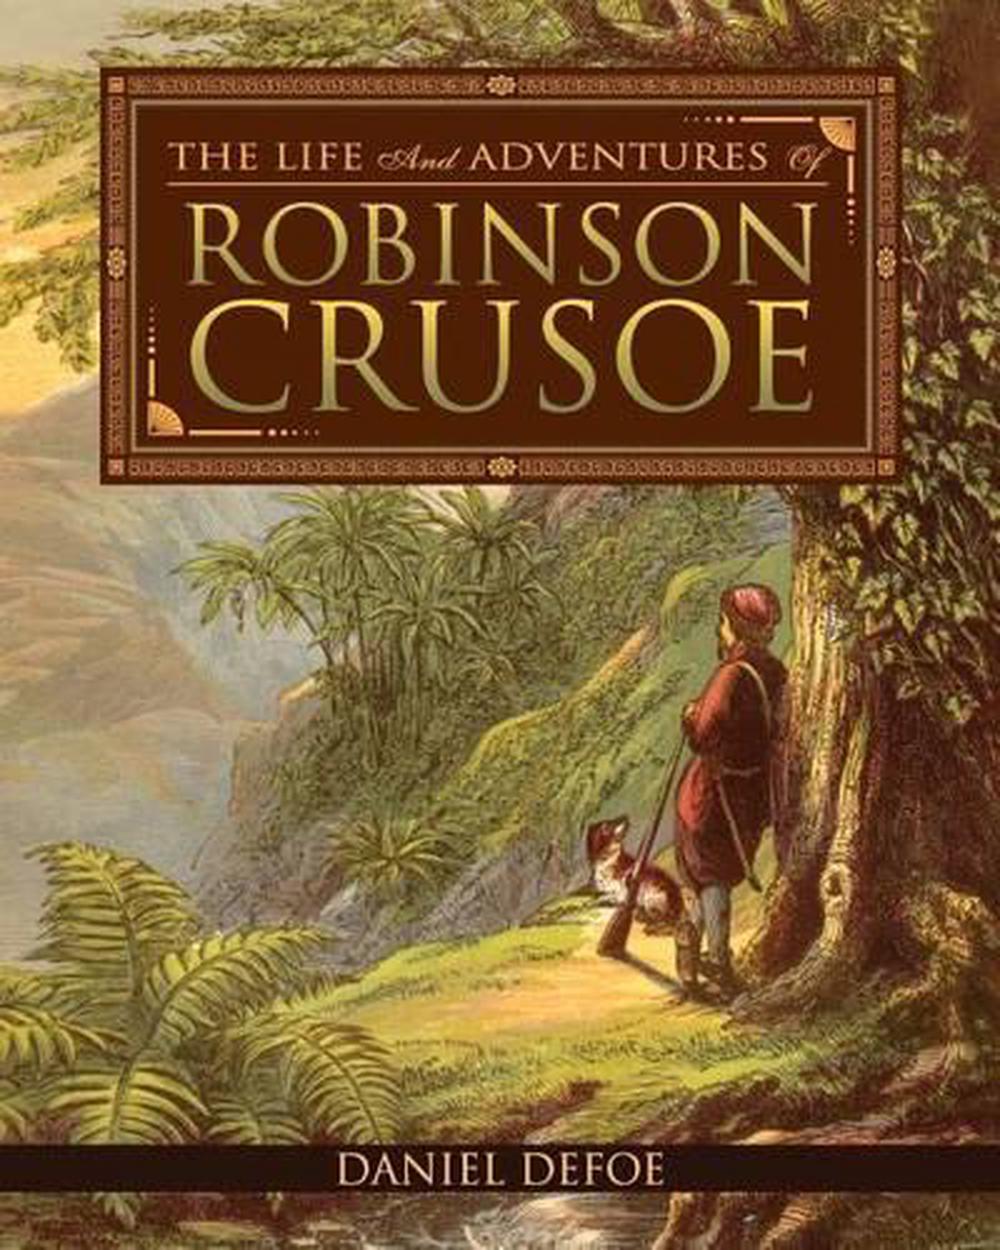 Робинзон крузо 15. Defoe Daniel "Robinson Crusoe". Life and Adventures of Robinson Crusoe. Книга Robinson Crusoe. Робинзон Крузо обложка книги.